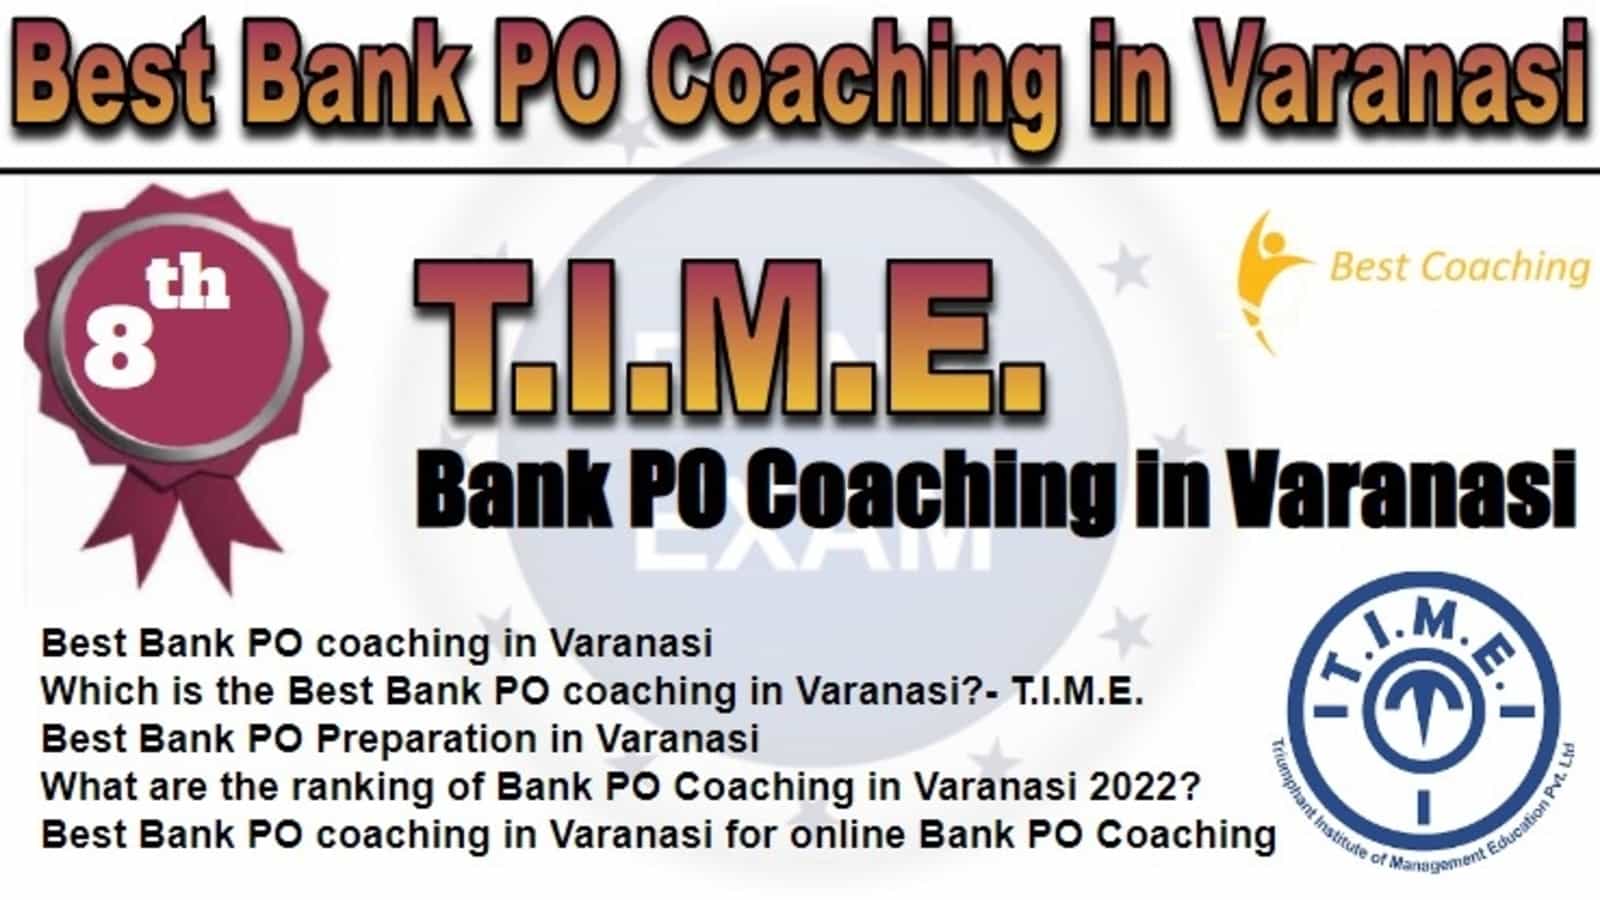 Rank 8 Best Bank PO Coaching in Varanasi